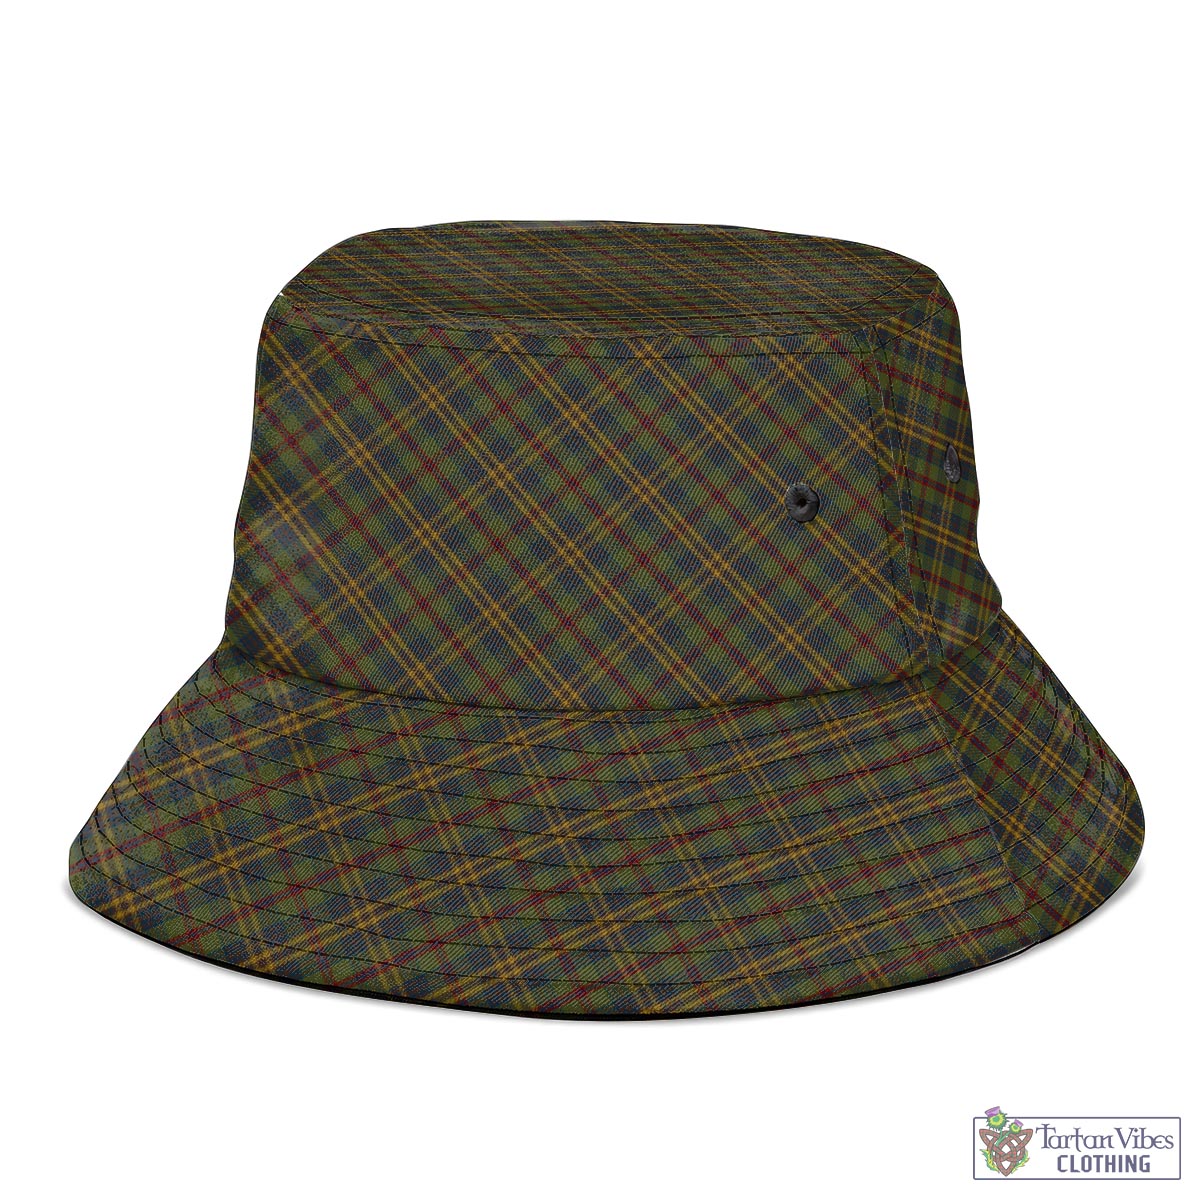 Tartan Vibes Clothing Limerick County Ireland Tartan Bucket Hat